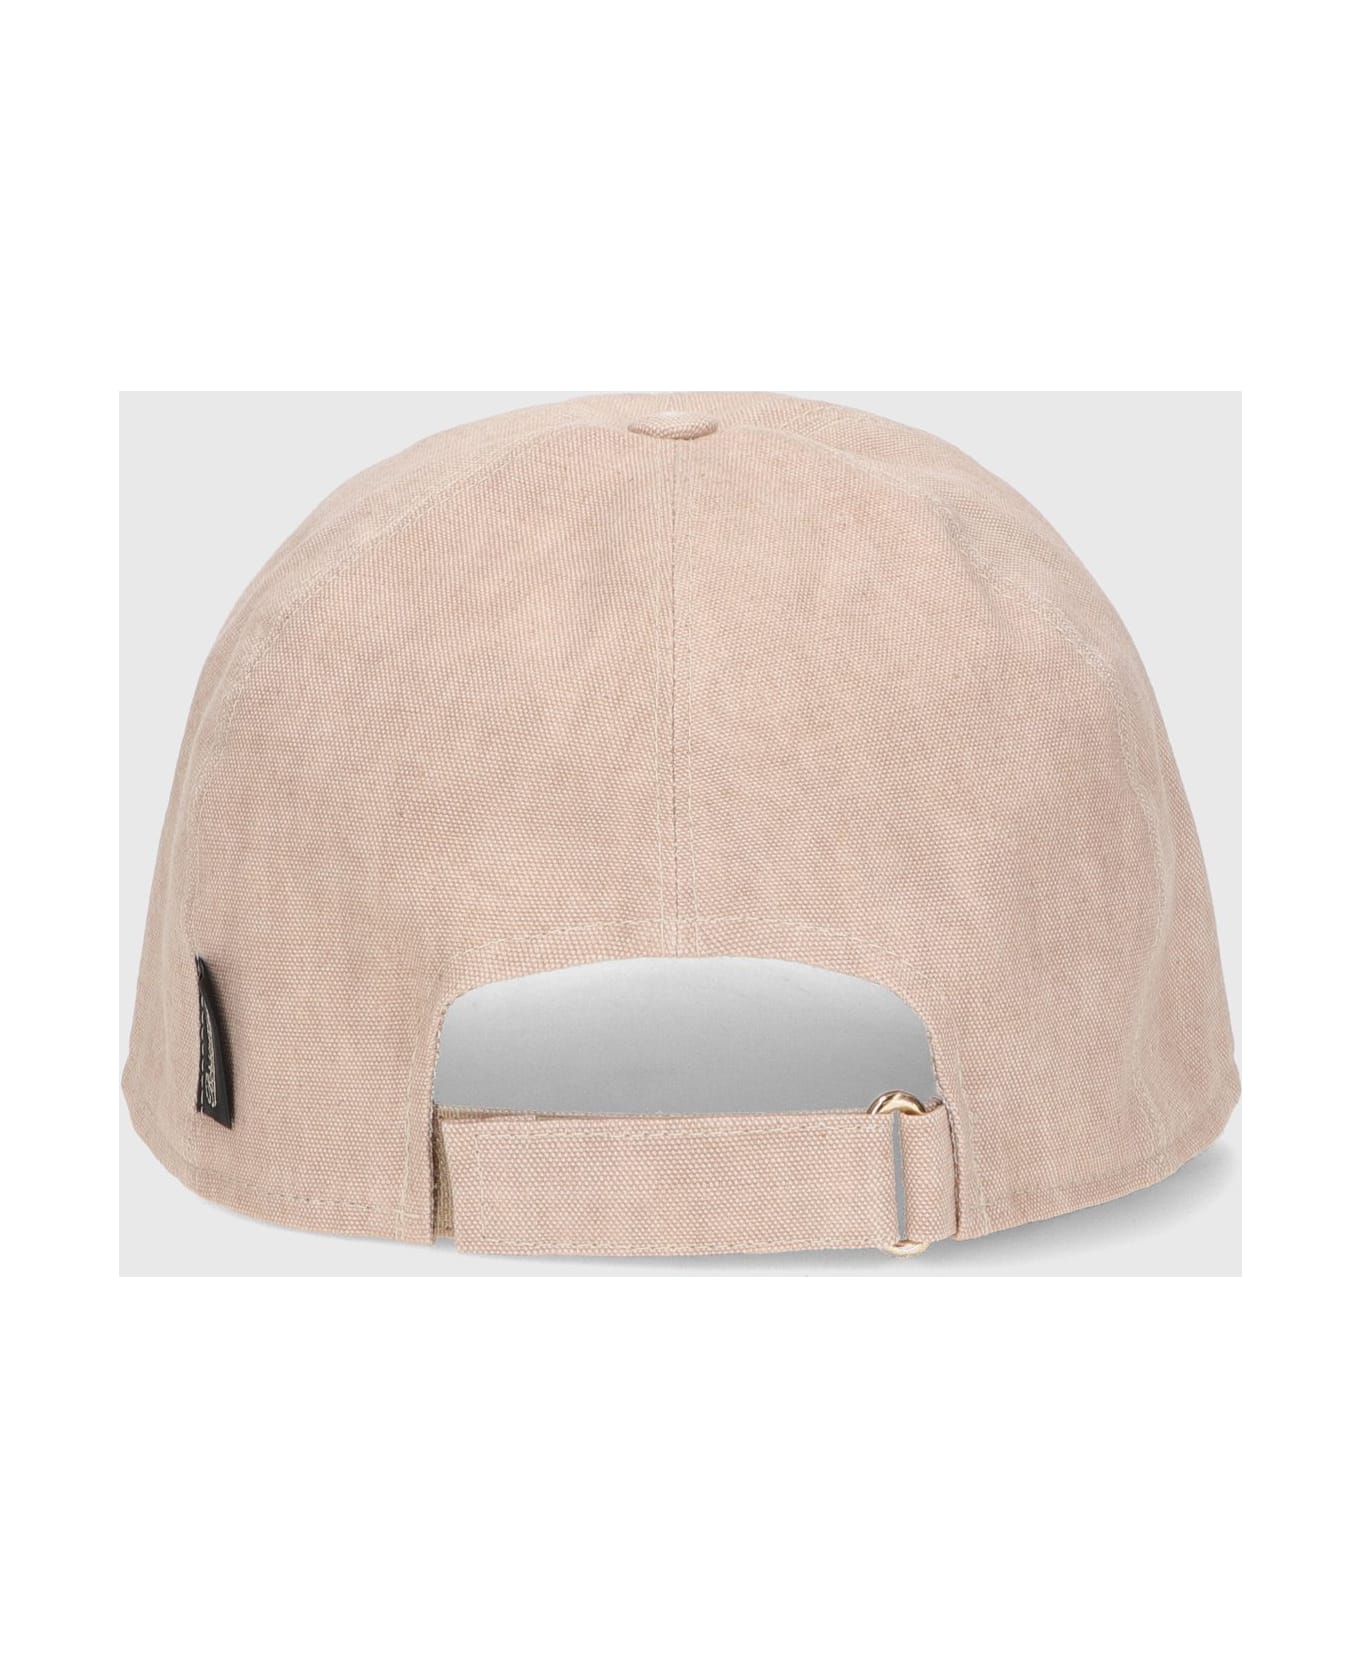 Borsalino Hiker Baseball Cap - BEIGE 帽子